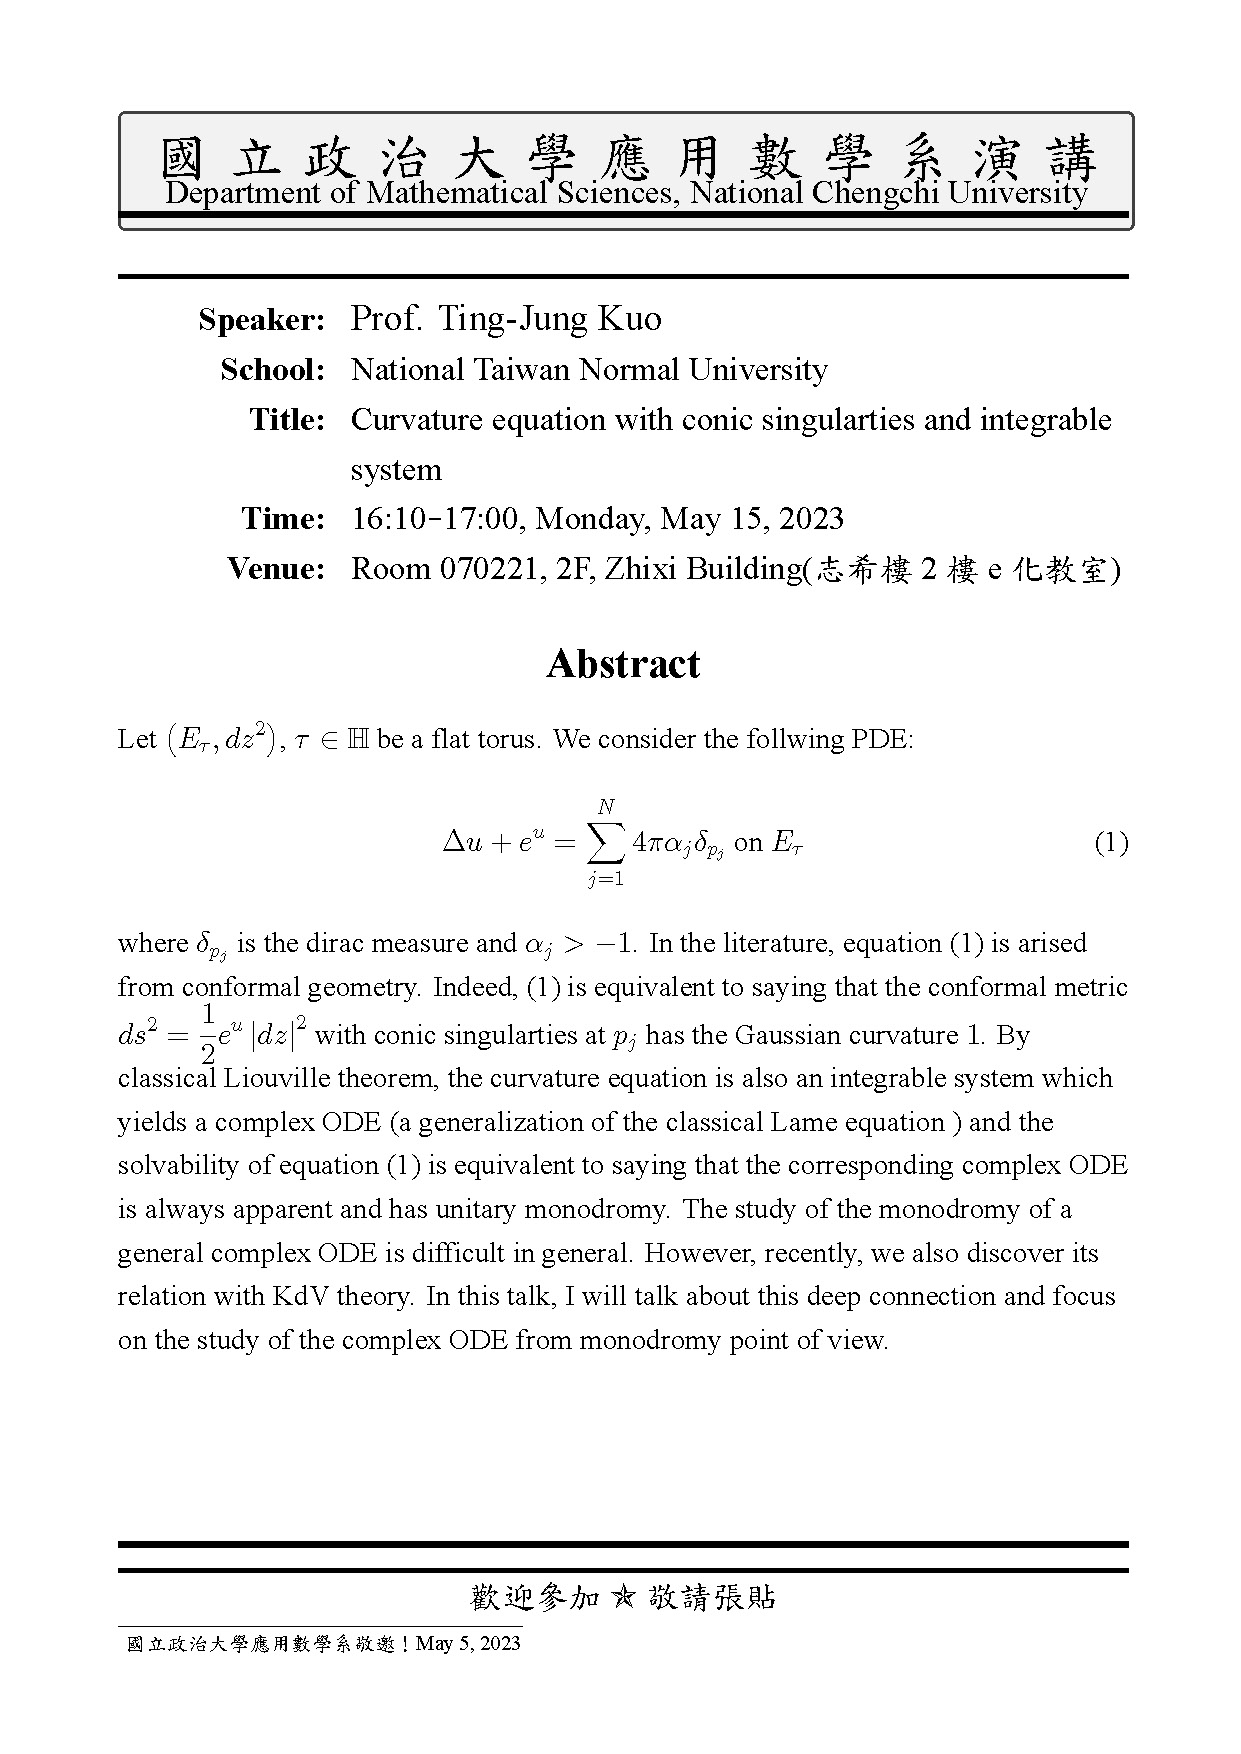 [演講日期2023/05/15] 郭庭榕副教授 (國立臺灣師範大學數學系) Curvature equation with conic singularties and integrable system